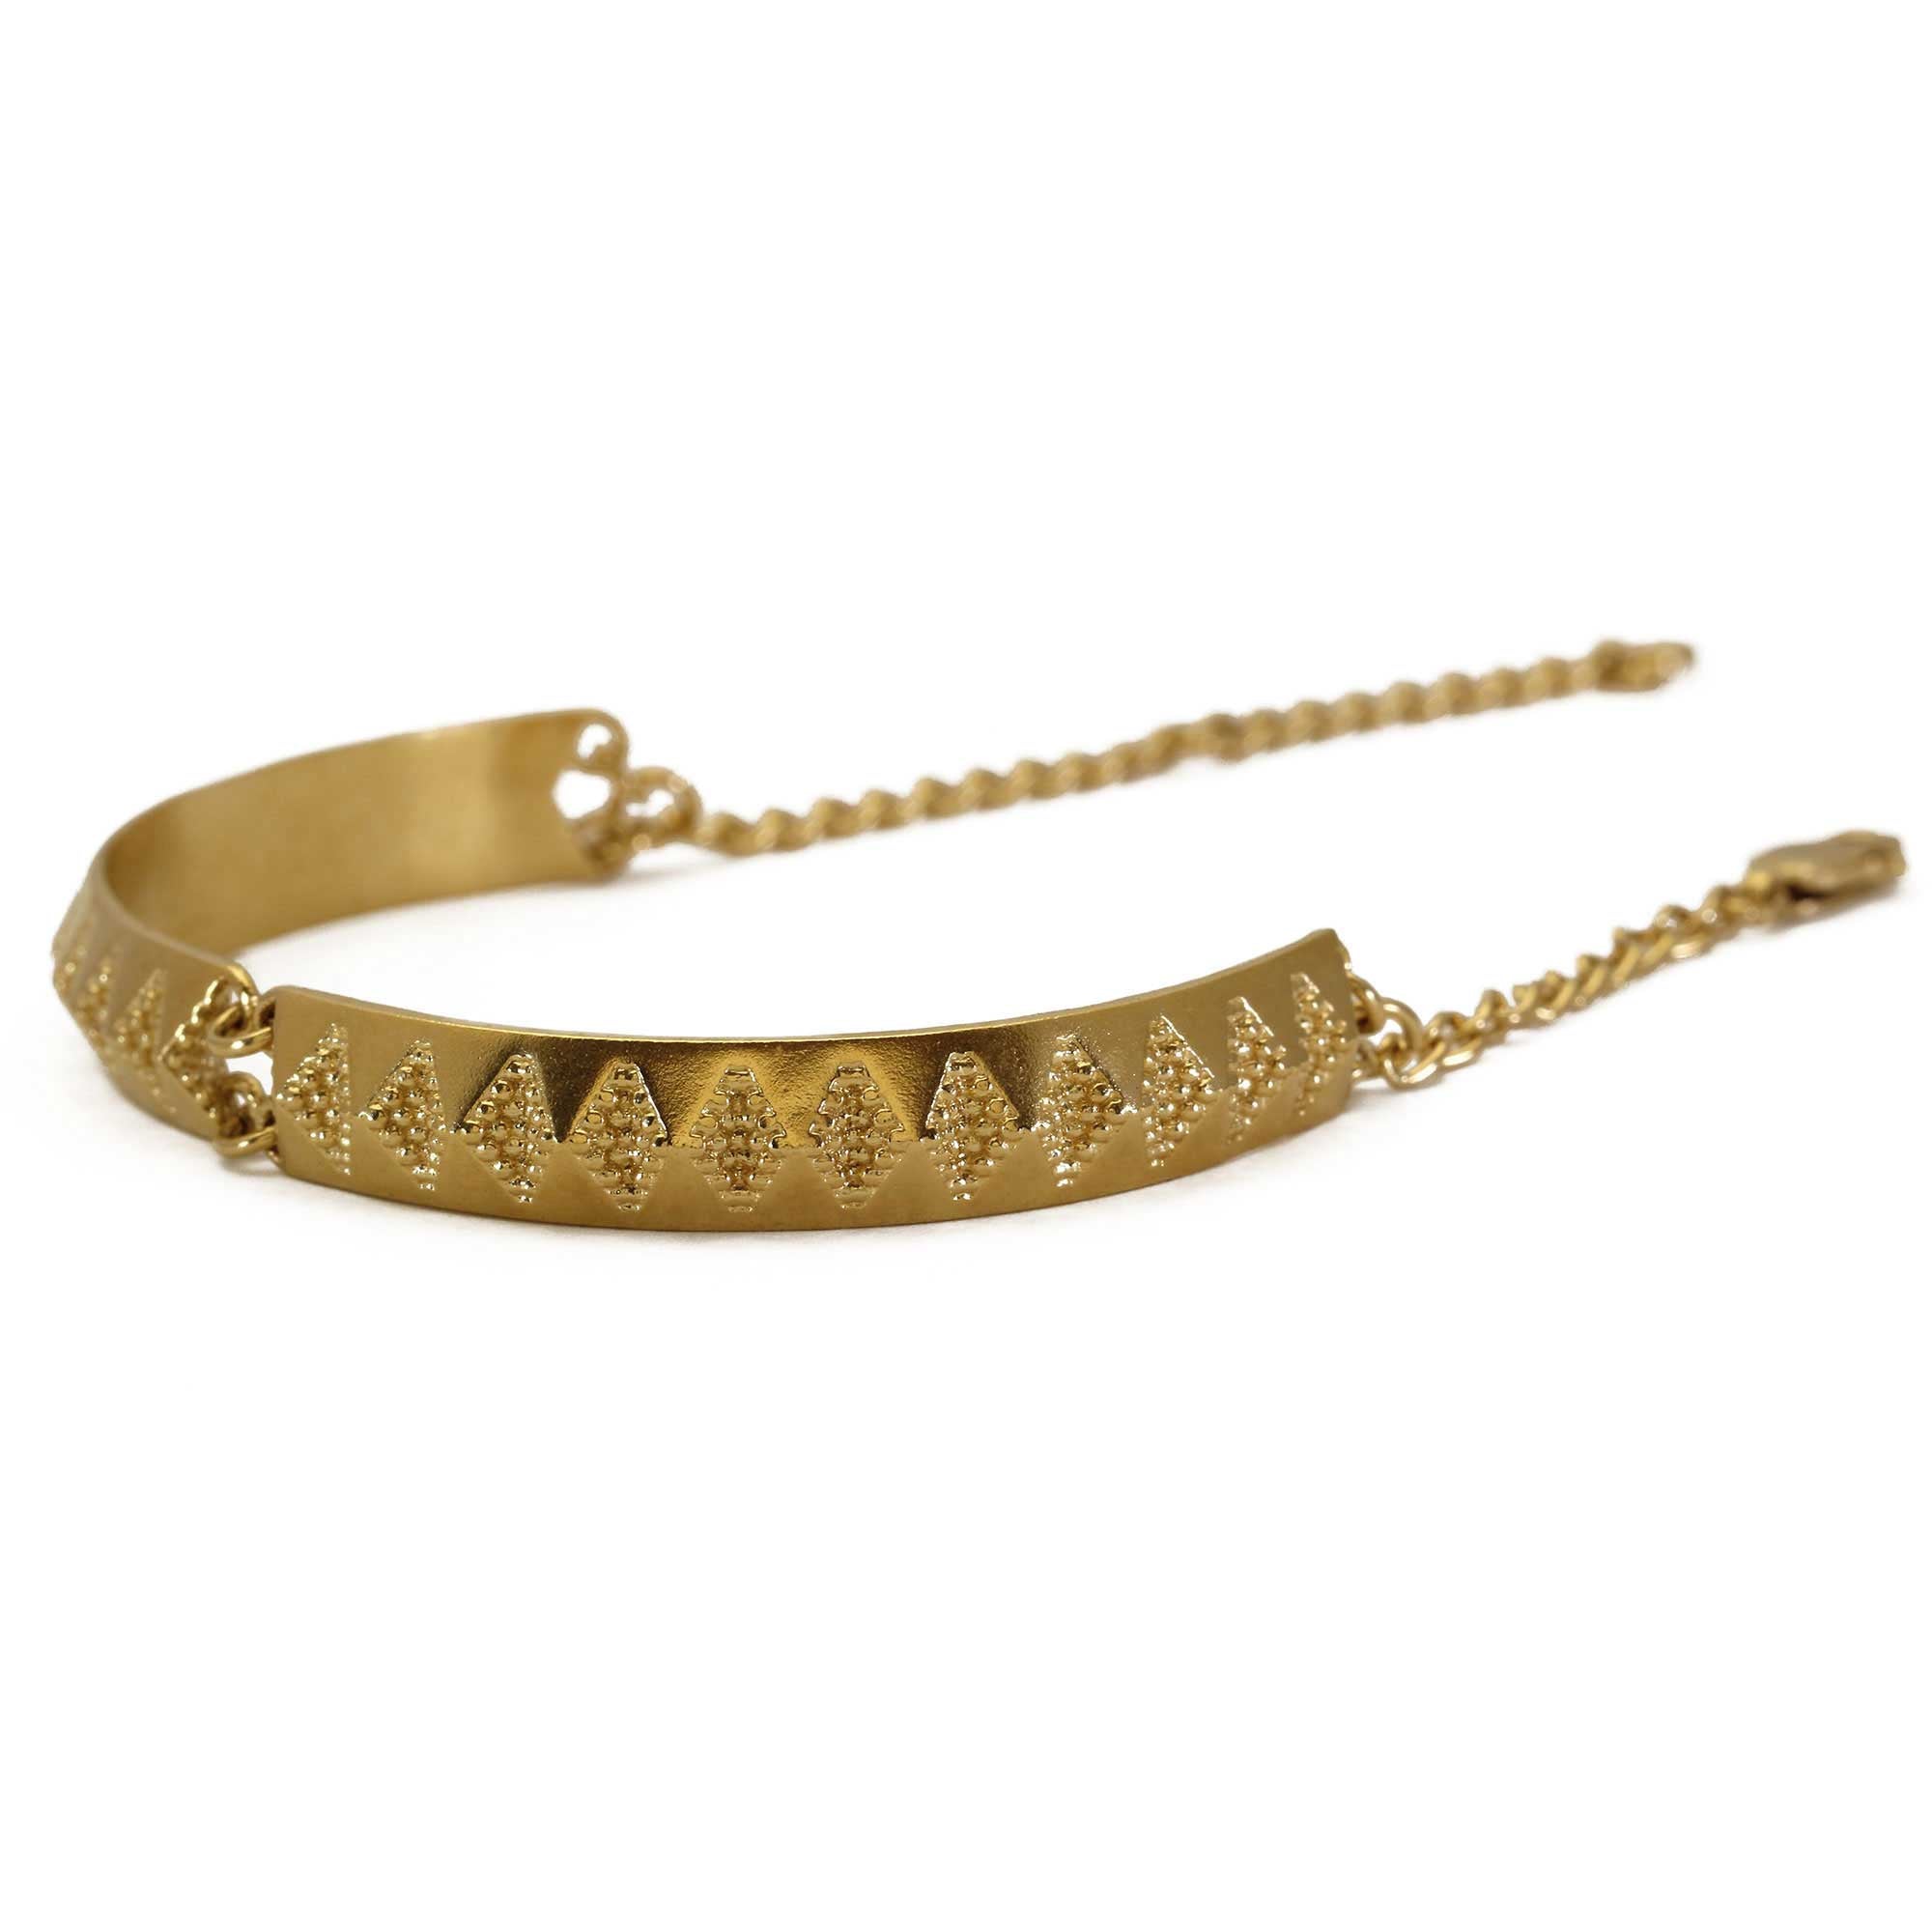 Diamond pattern texture of the gold bangle bracelet